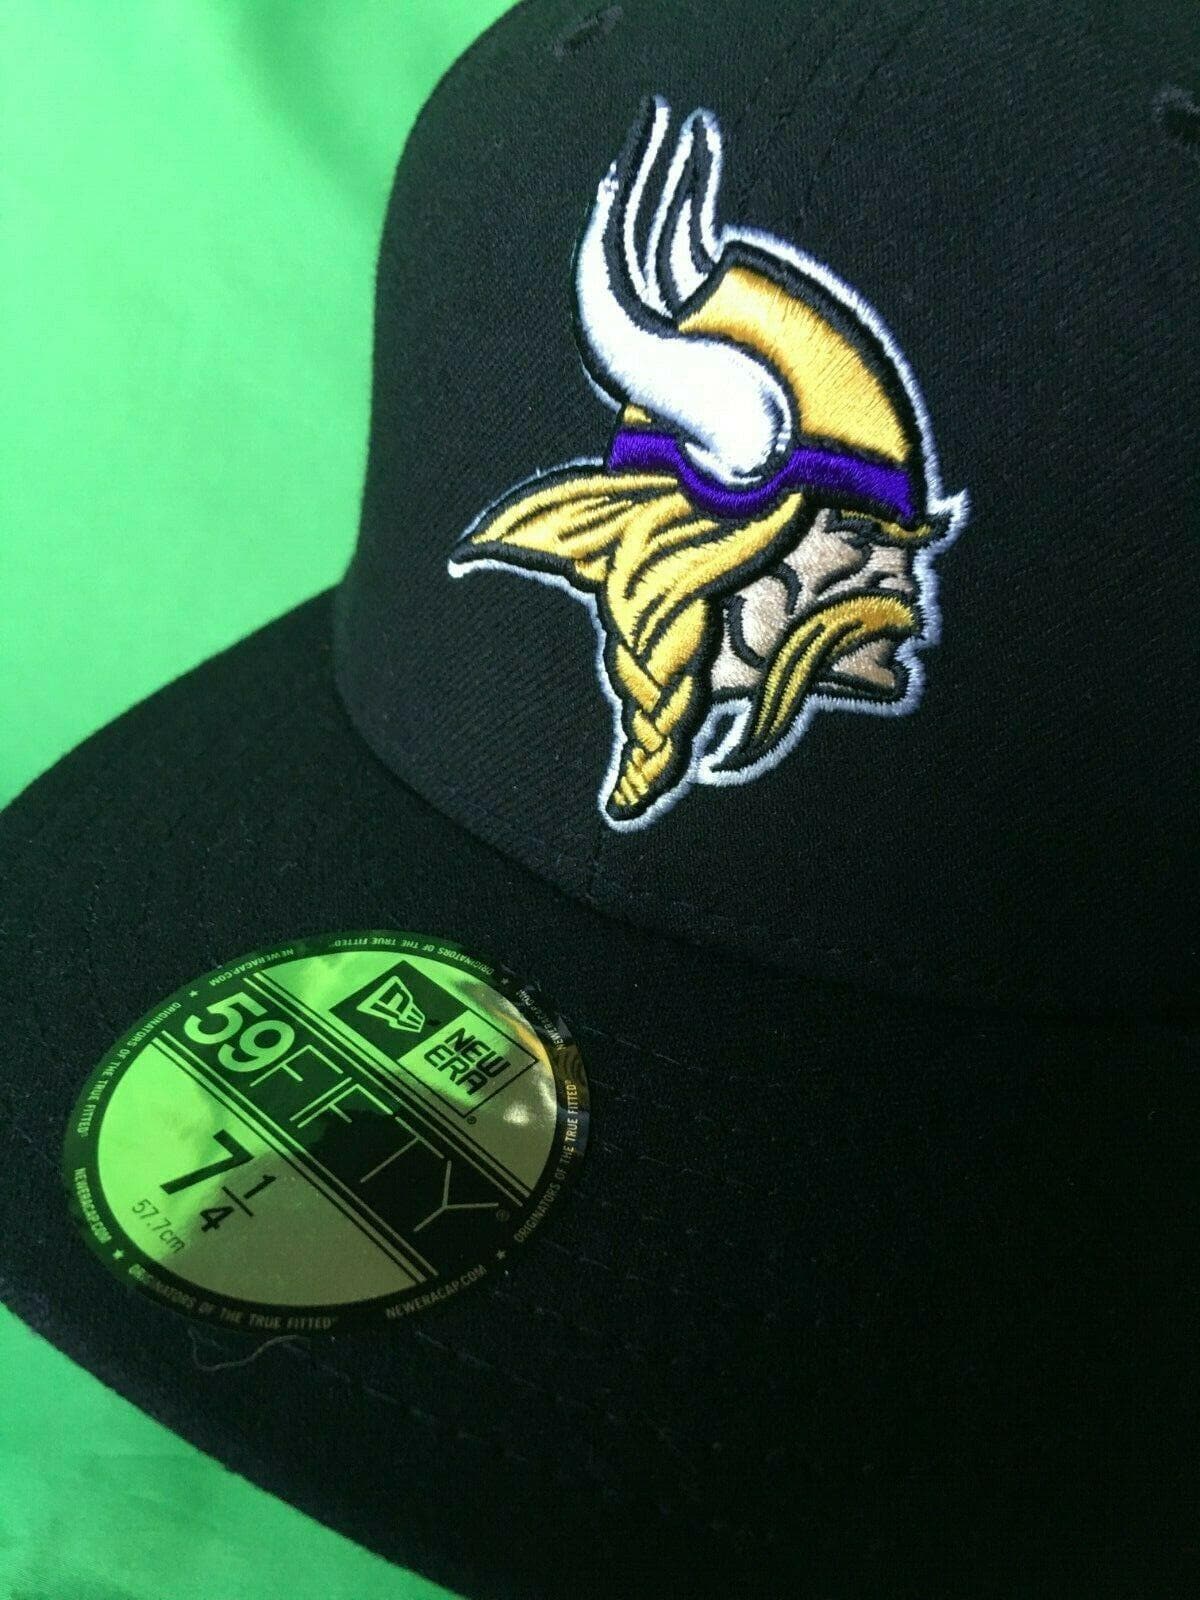 NFL Minnesota Vikings New Era 59FIFTY Baseball Hat/Cap 7-1/4 NWT